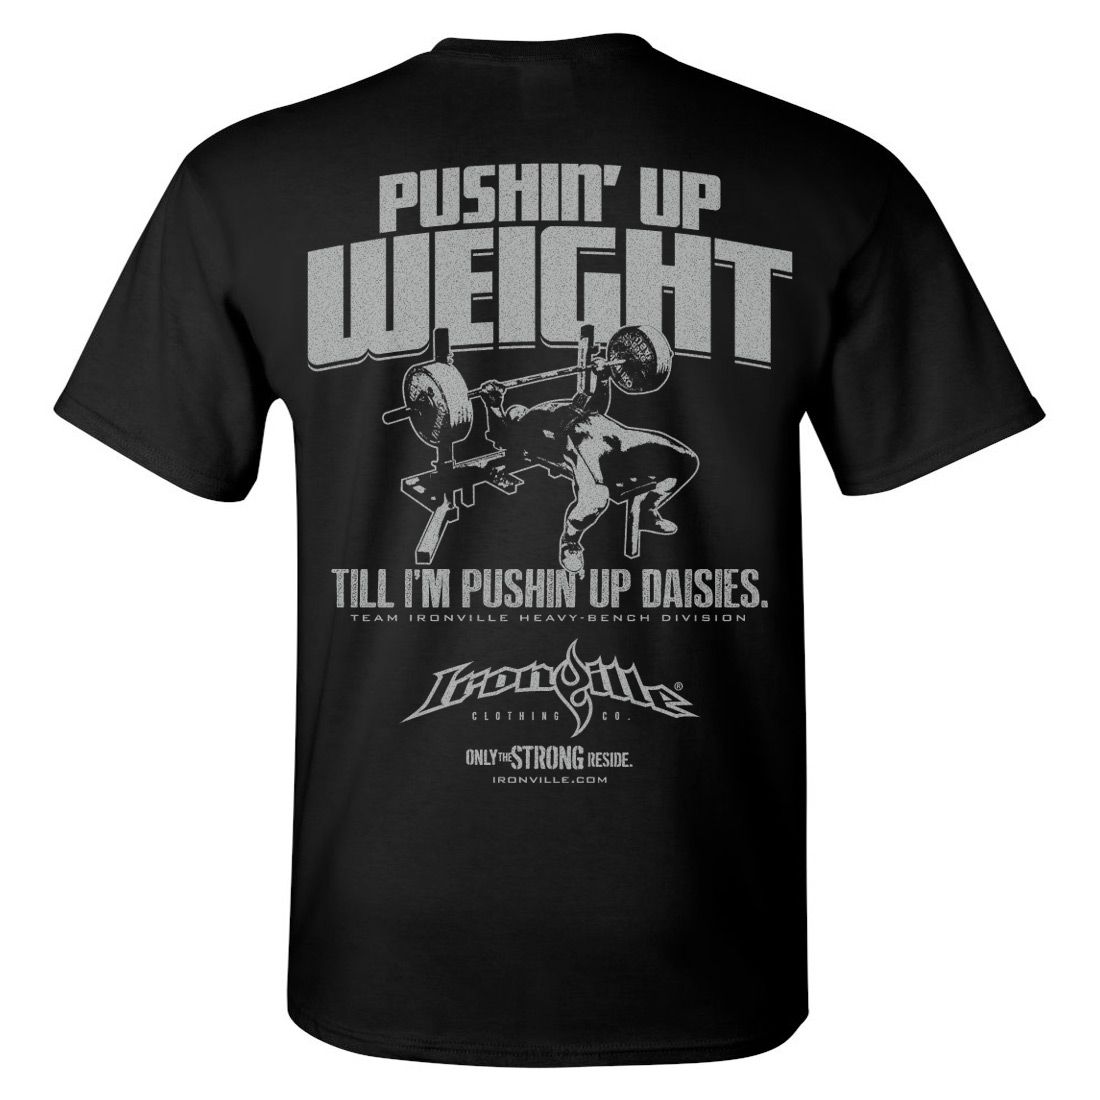 Pushin' Up Weight | Bench Press T-Shirt | Ironville Clothing